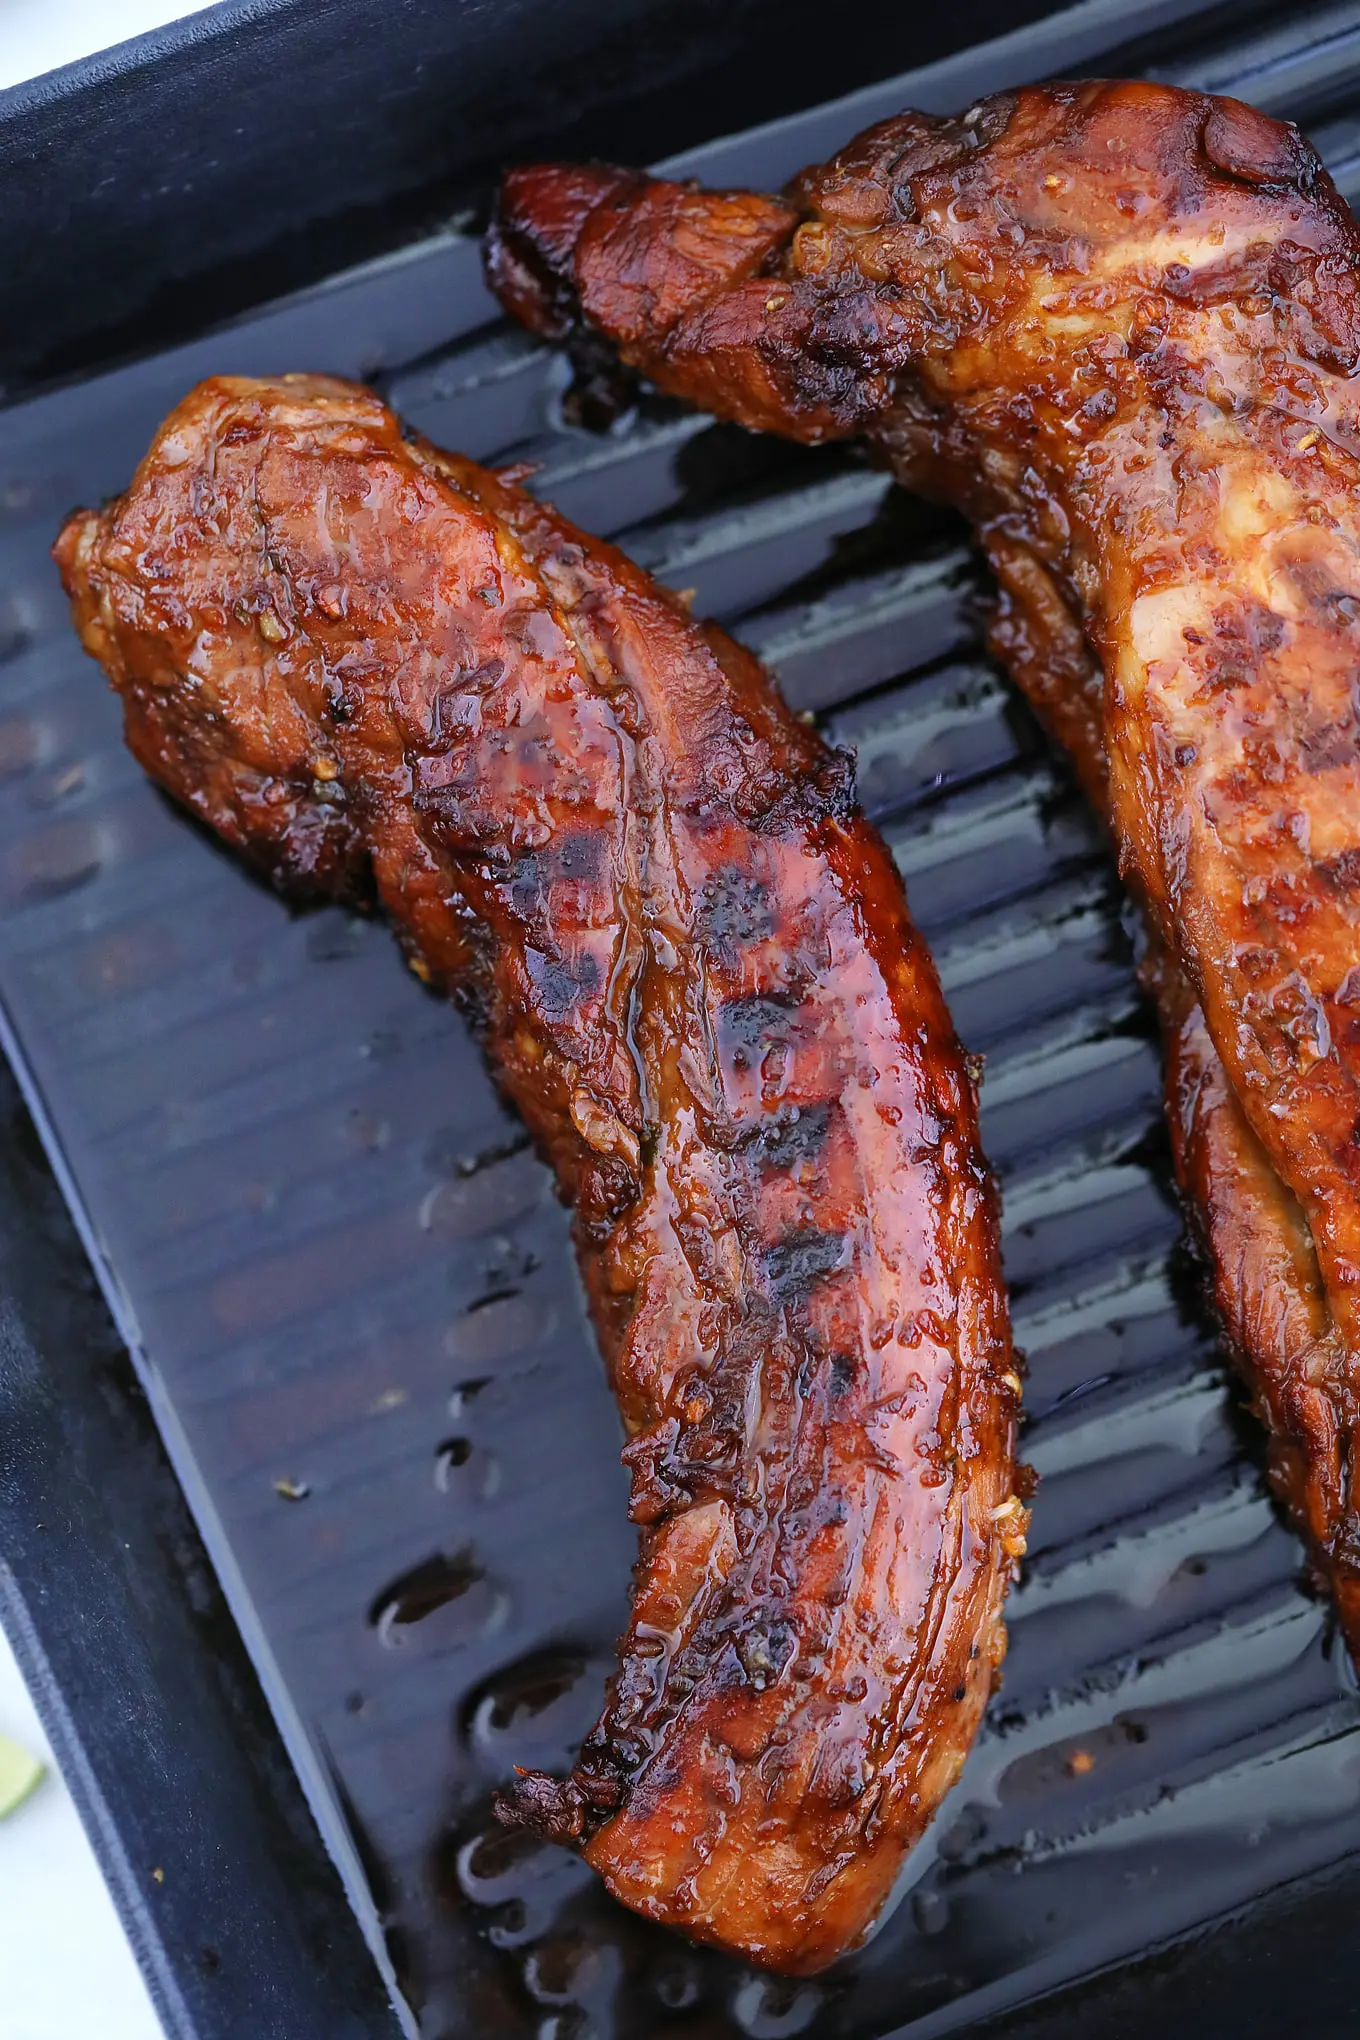 easy pork marinade for grilling